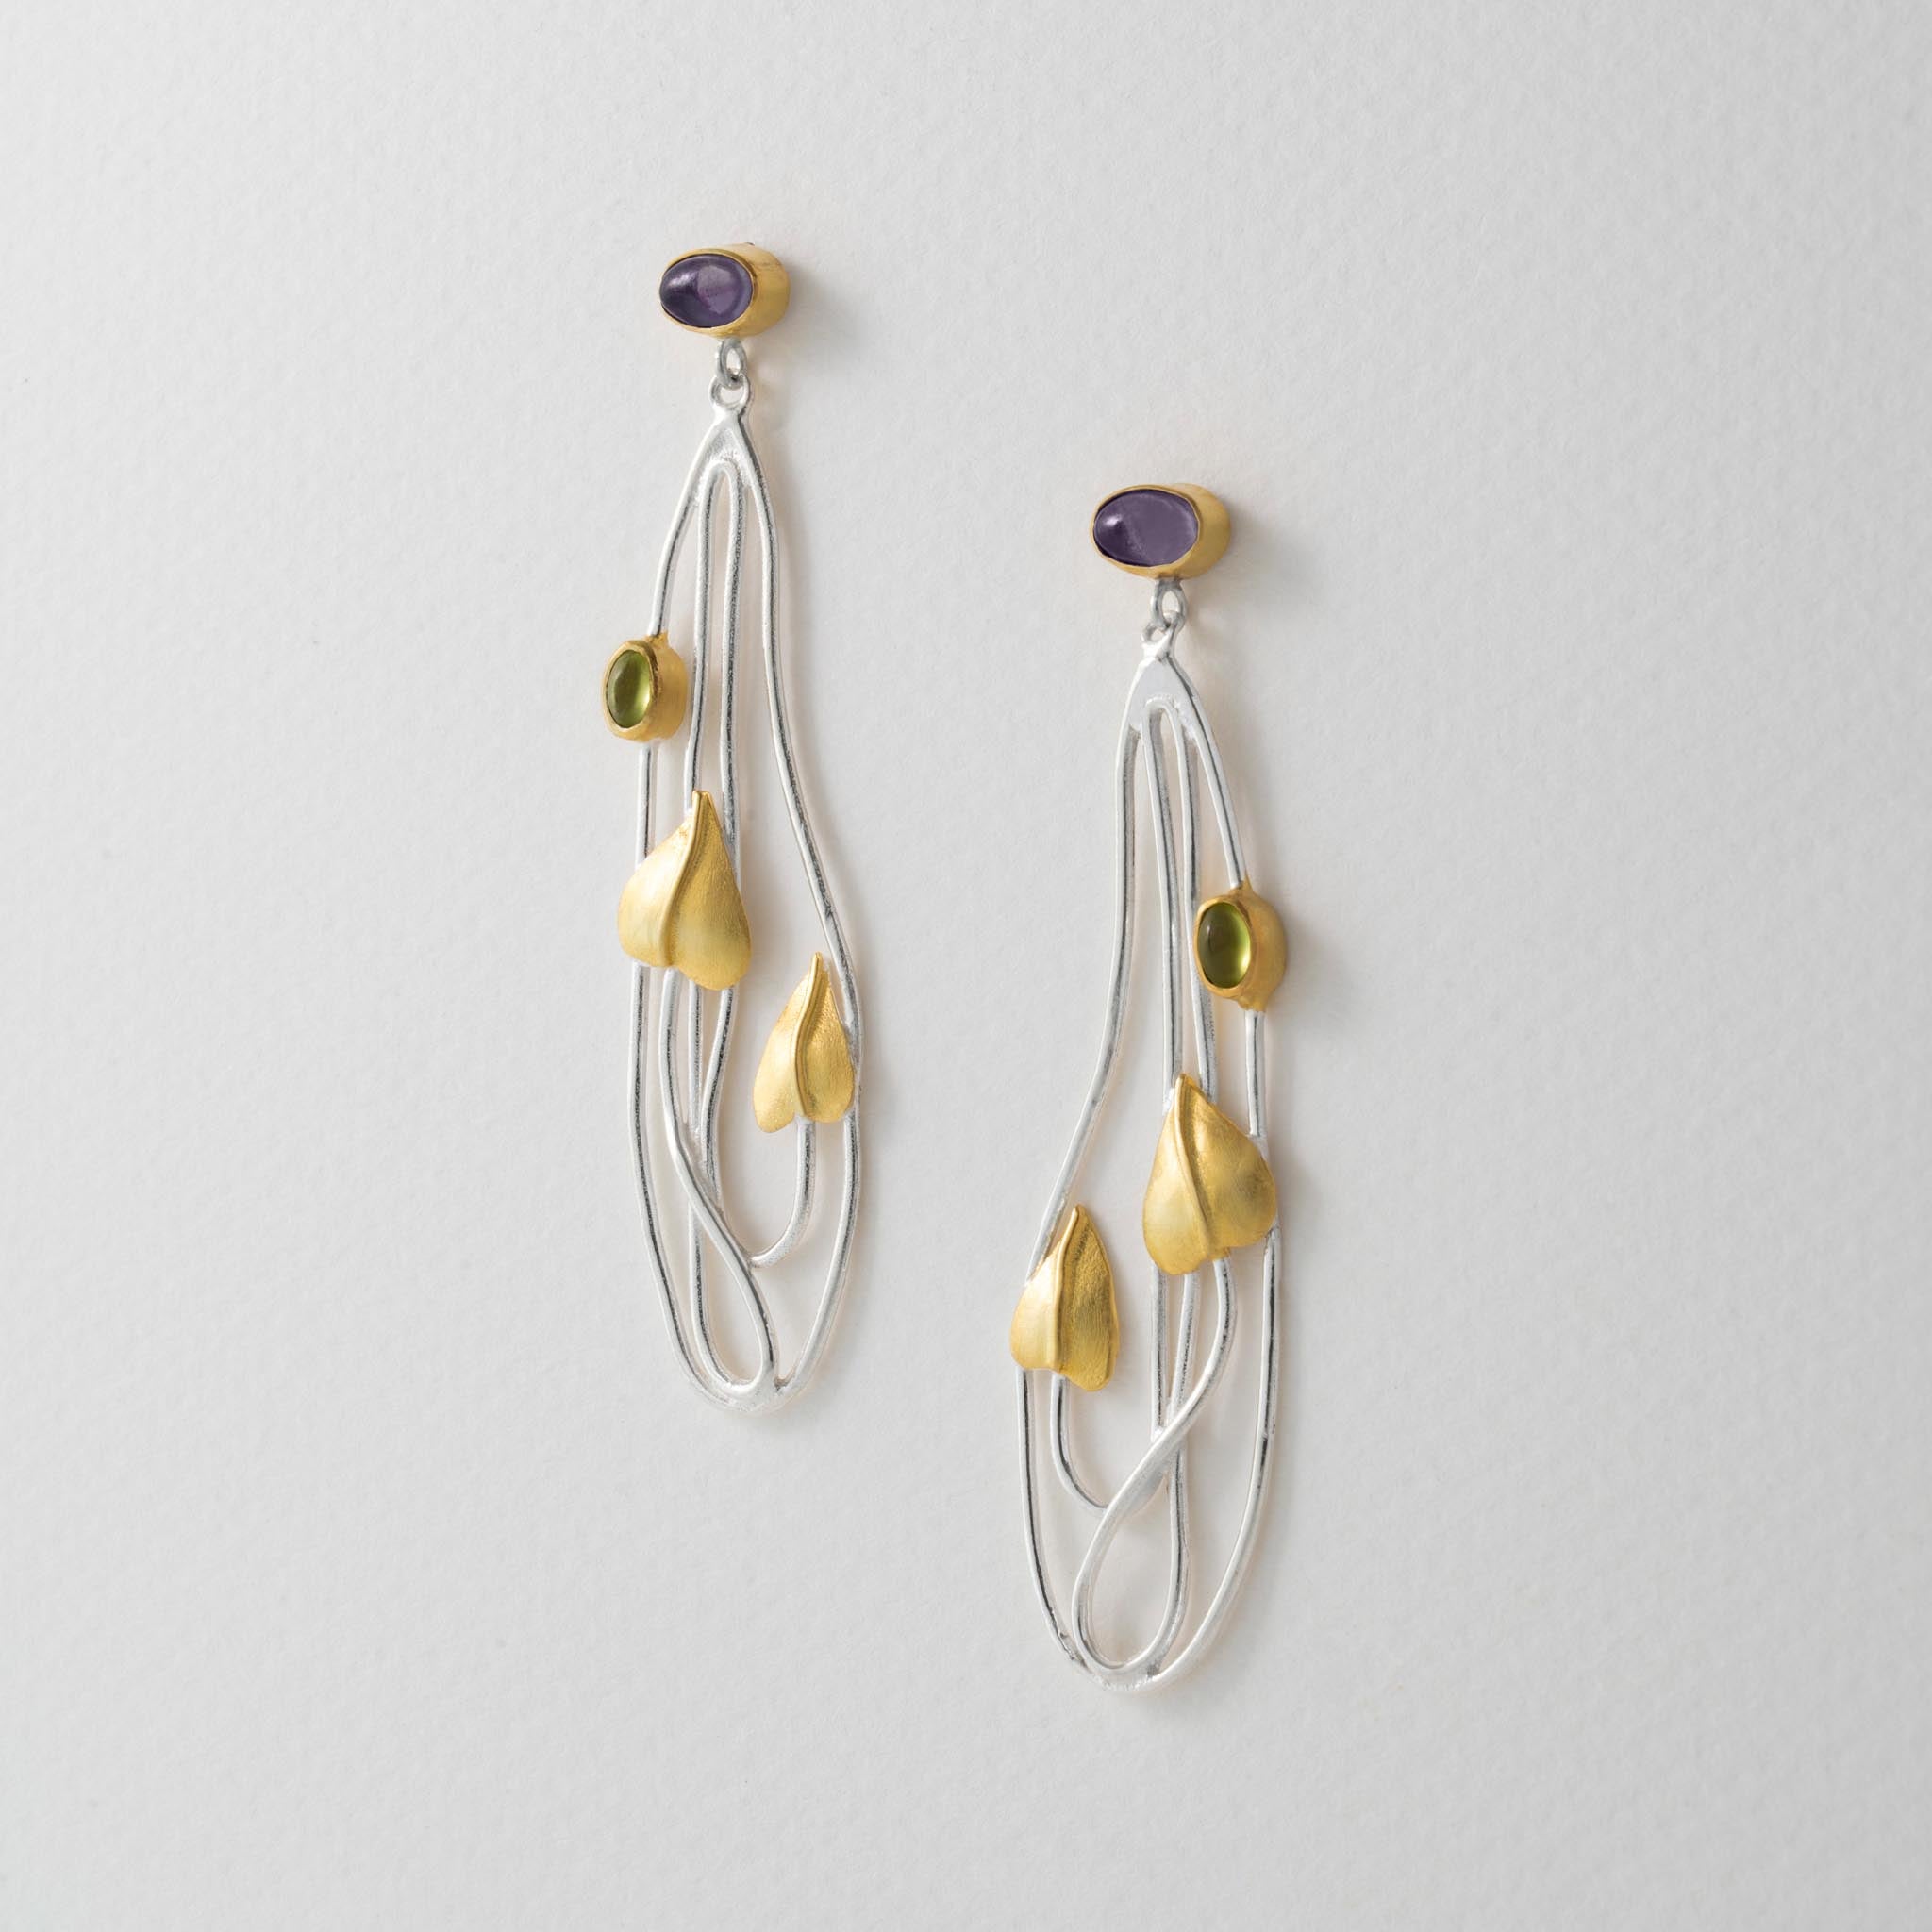 Paula Bolton Silver Jewellery - Macdonald Art Nouveau Drop Earrings